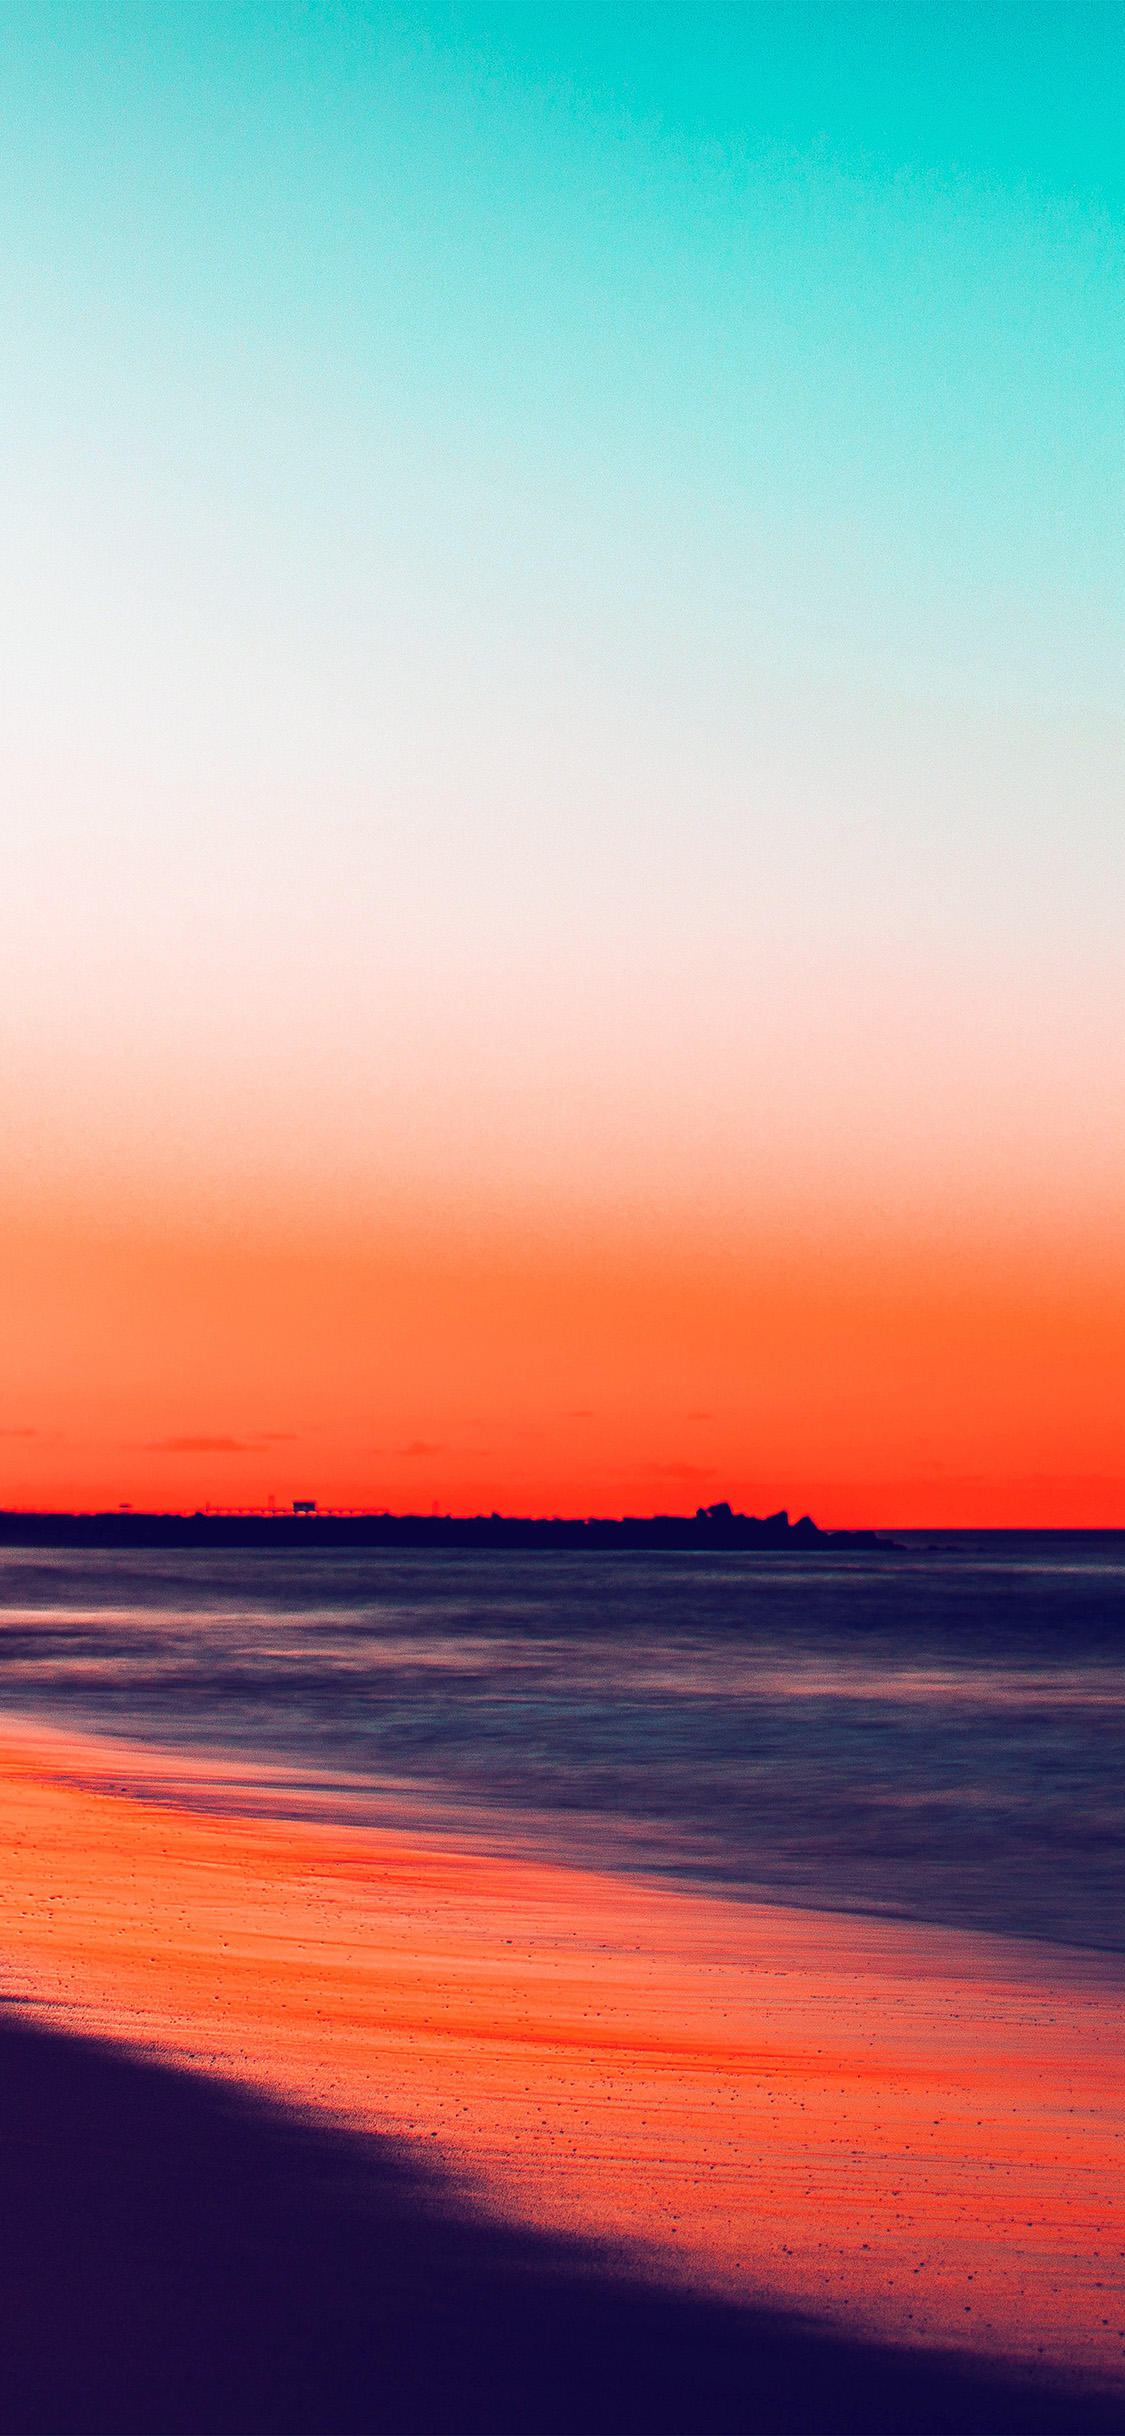 iPhone X wallpaper. sunset beach fall night sea nature red